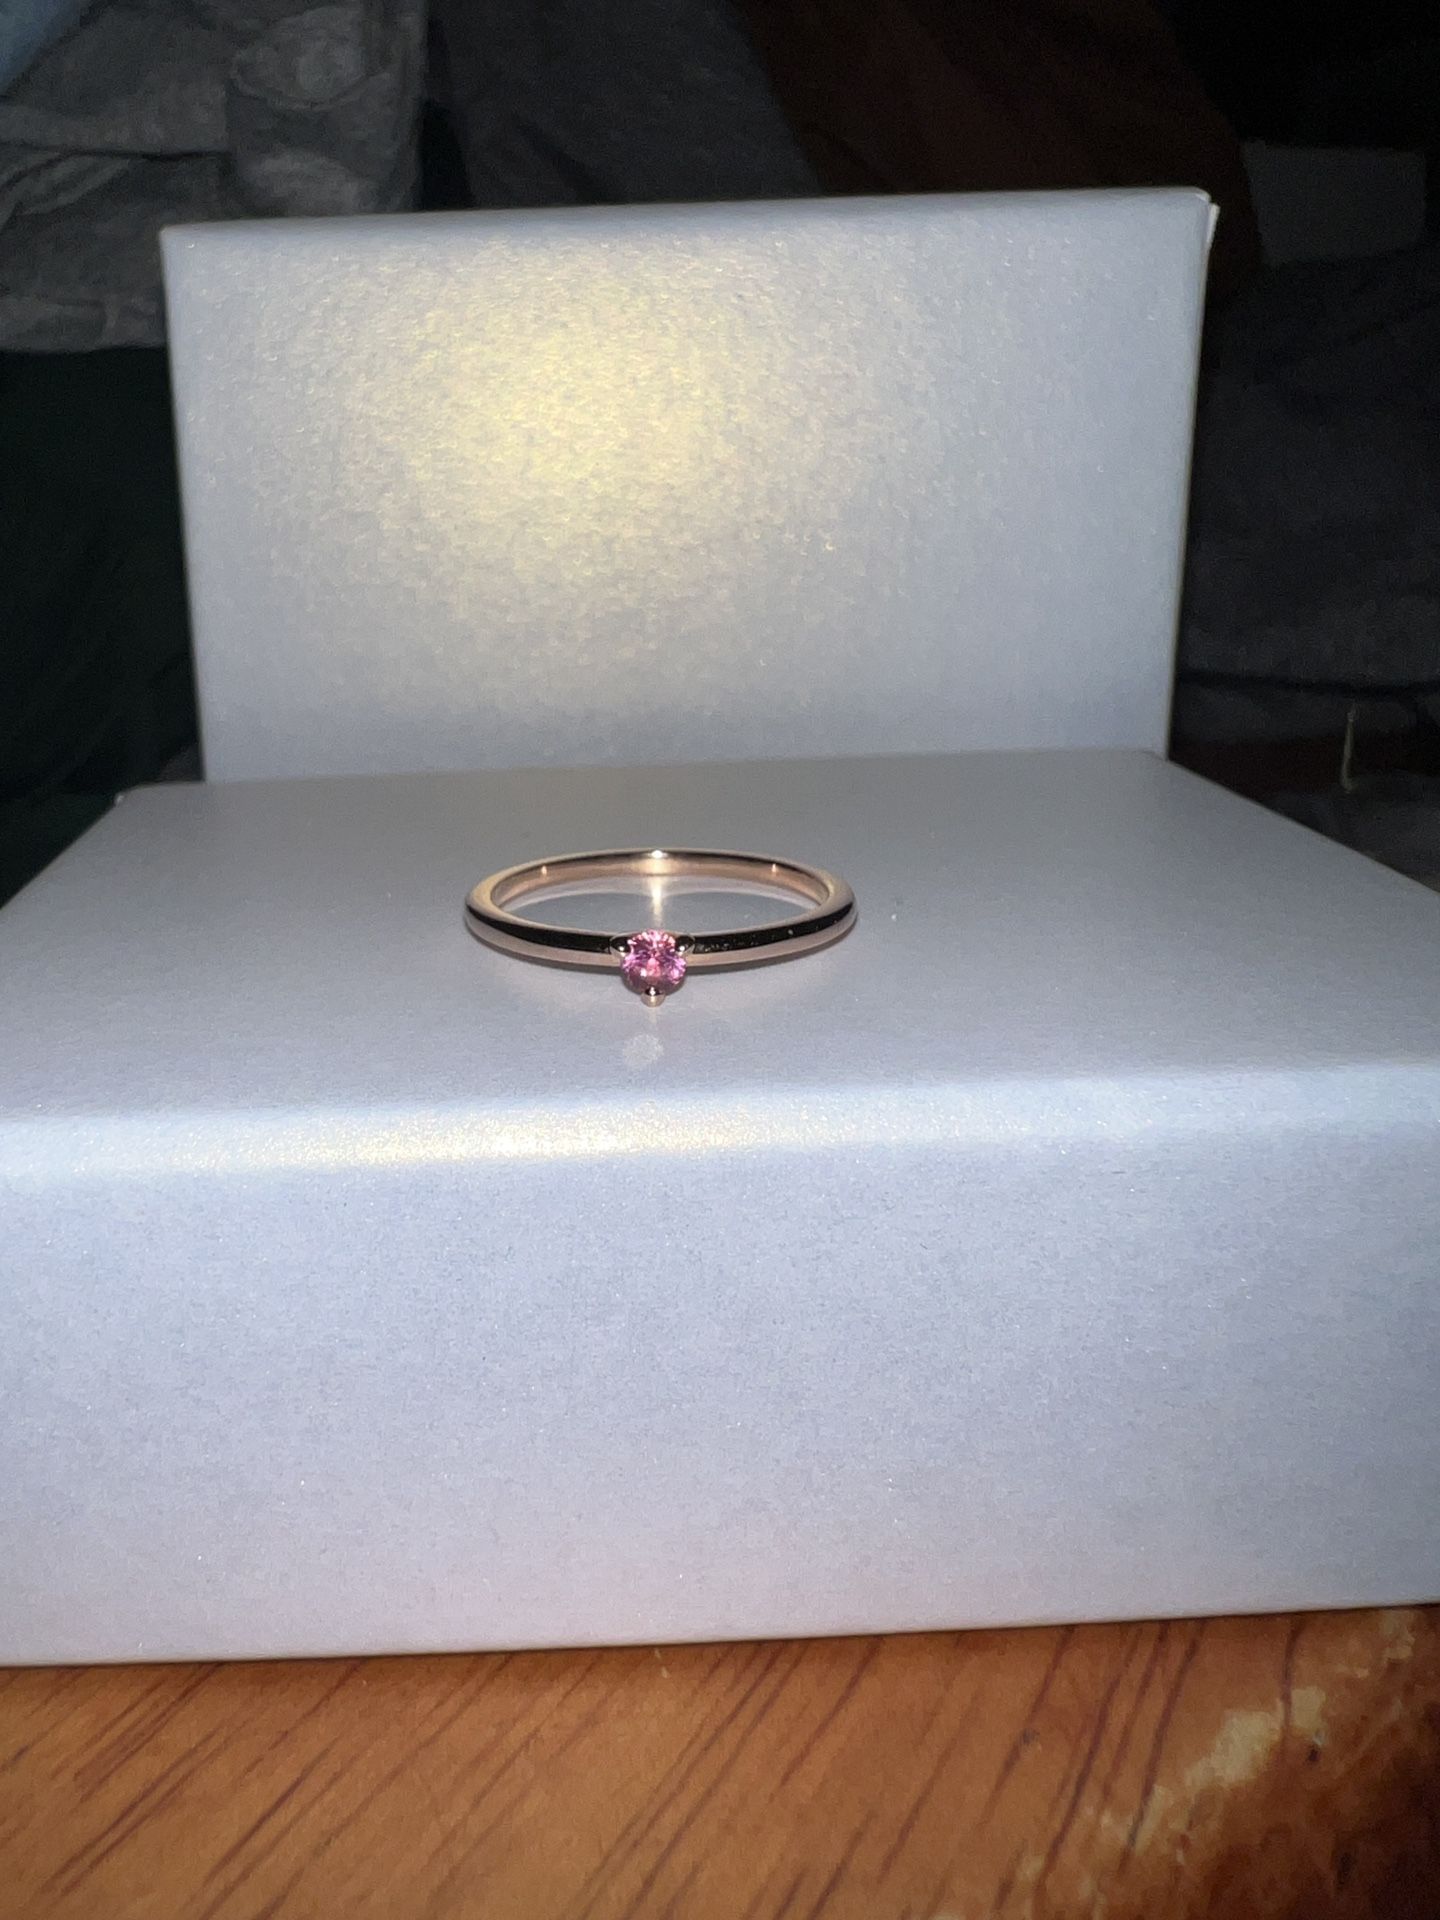 Pandora Timeless 14K Rose Gold Plated Crystal Ring › Pandora Timeless 14K Rose Gold Plated Crystal Ring 